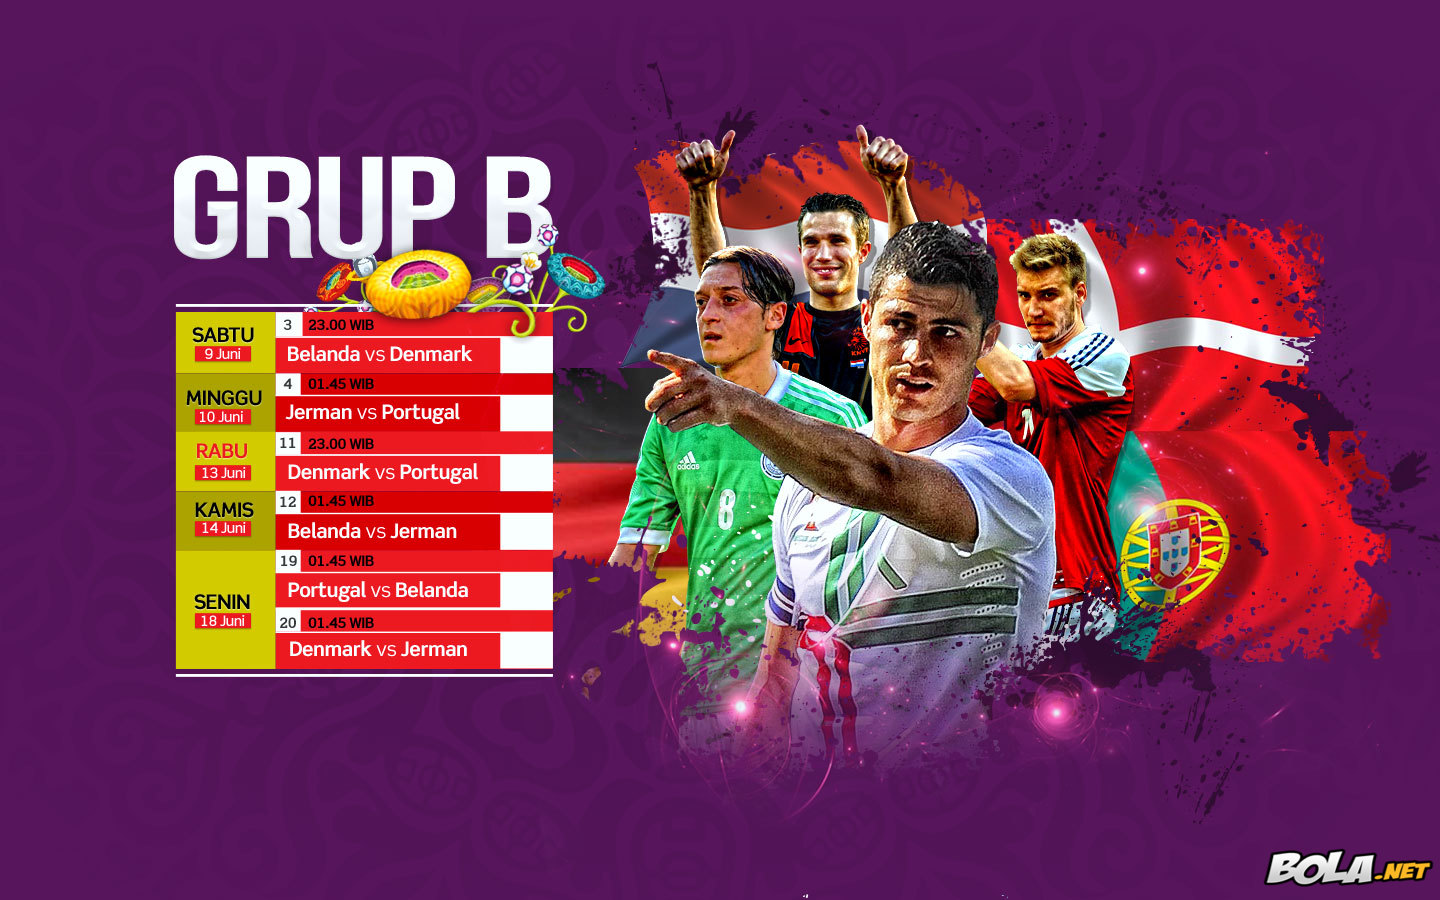 Deskripsi : Wallpaper Jadwal Grup B Euro 2012, size: 1440x900